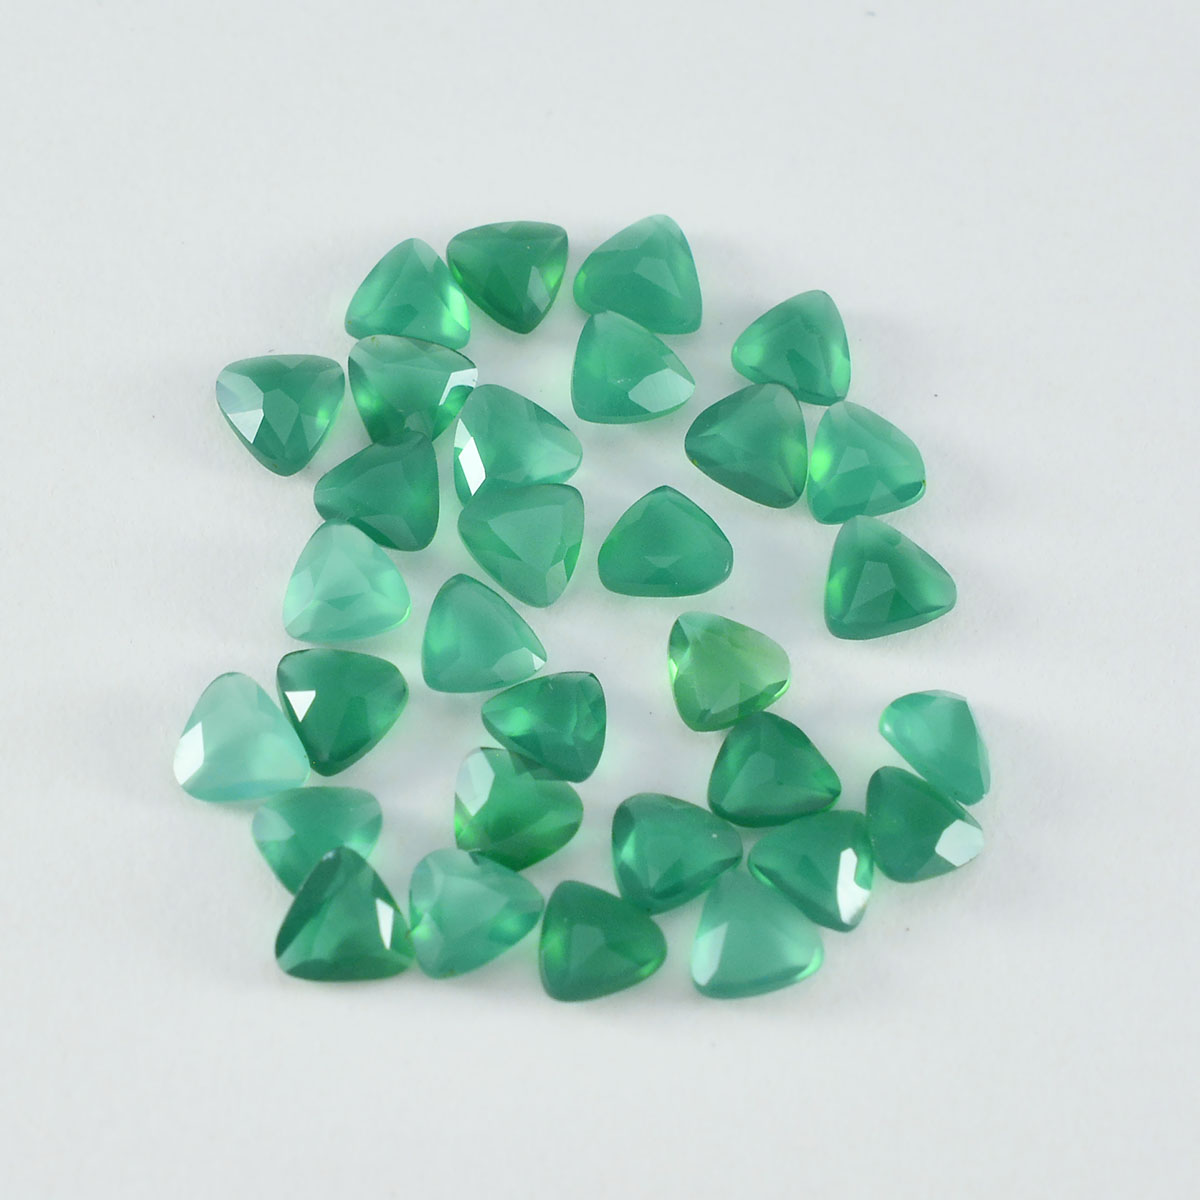 riyogems 1pc リアル グリーン オニキス ファセット 7x7 mm 兆形状の驚くべき品質の宝石